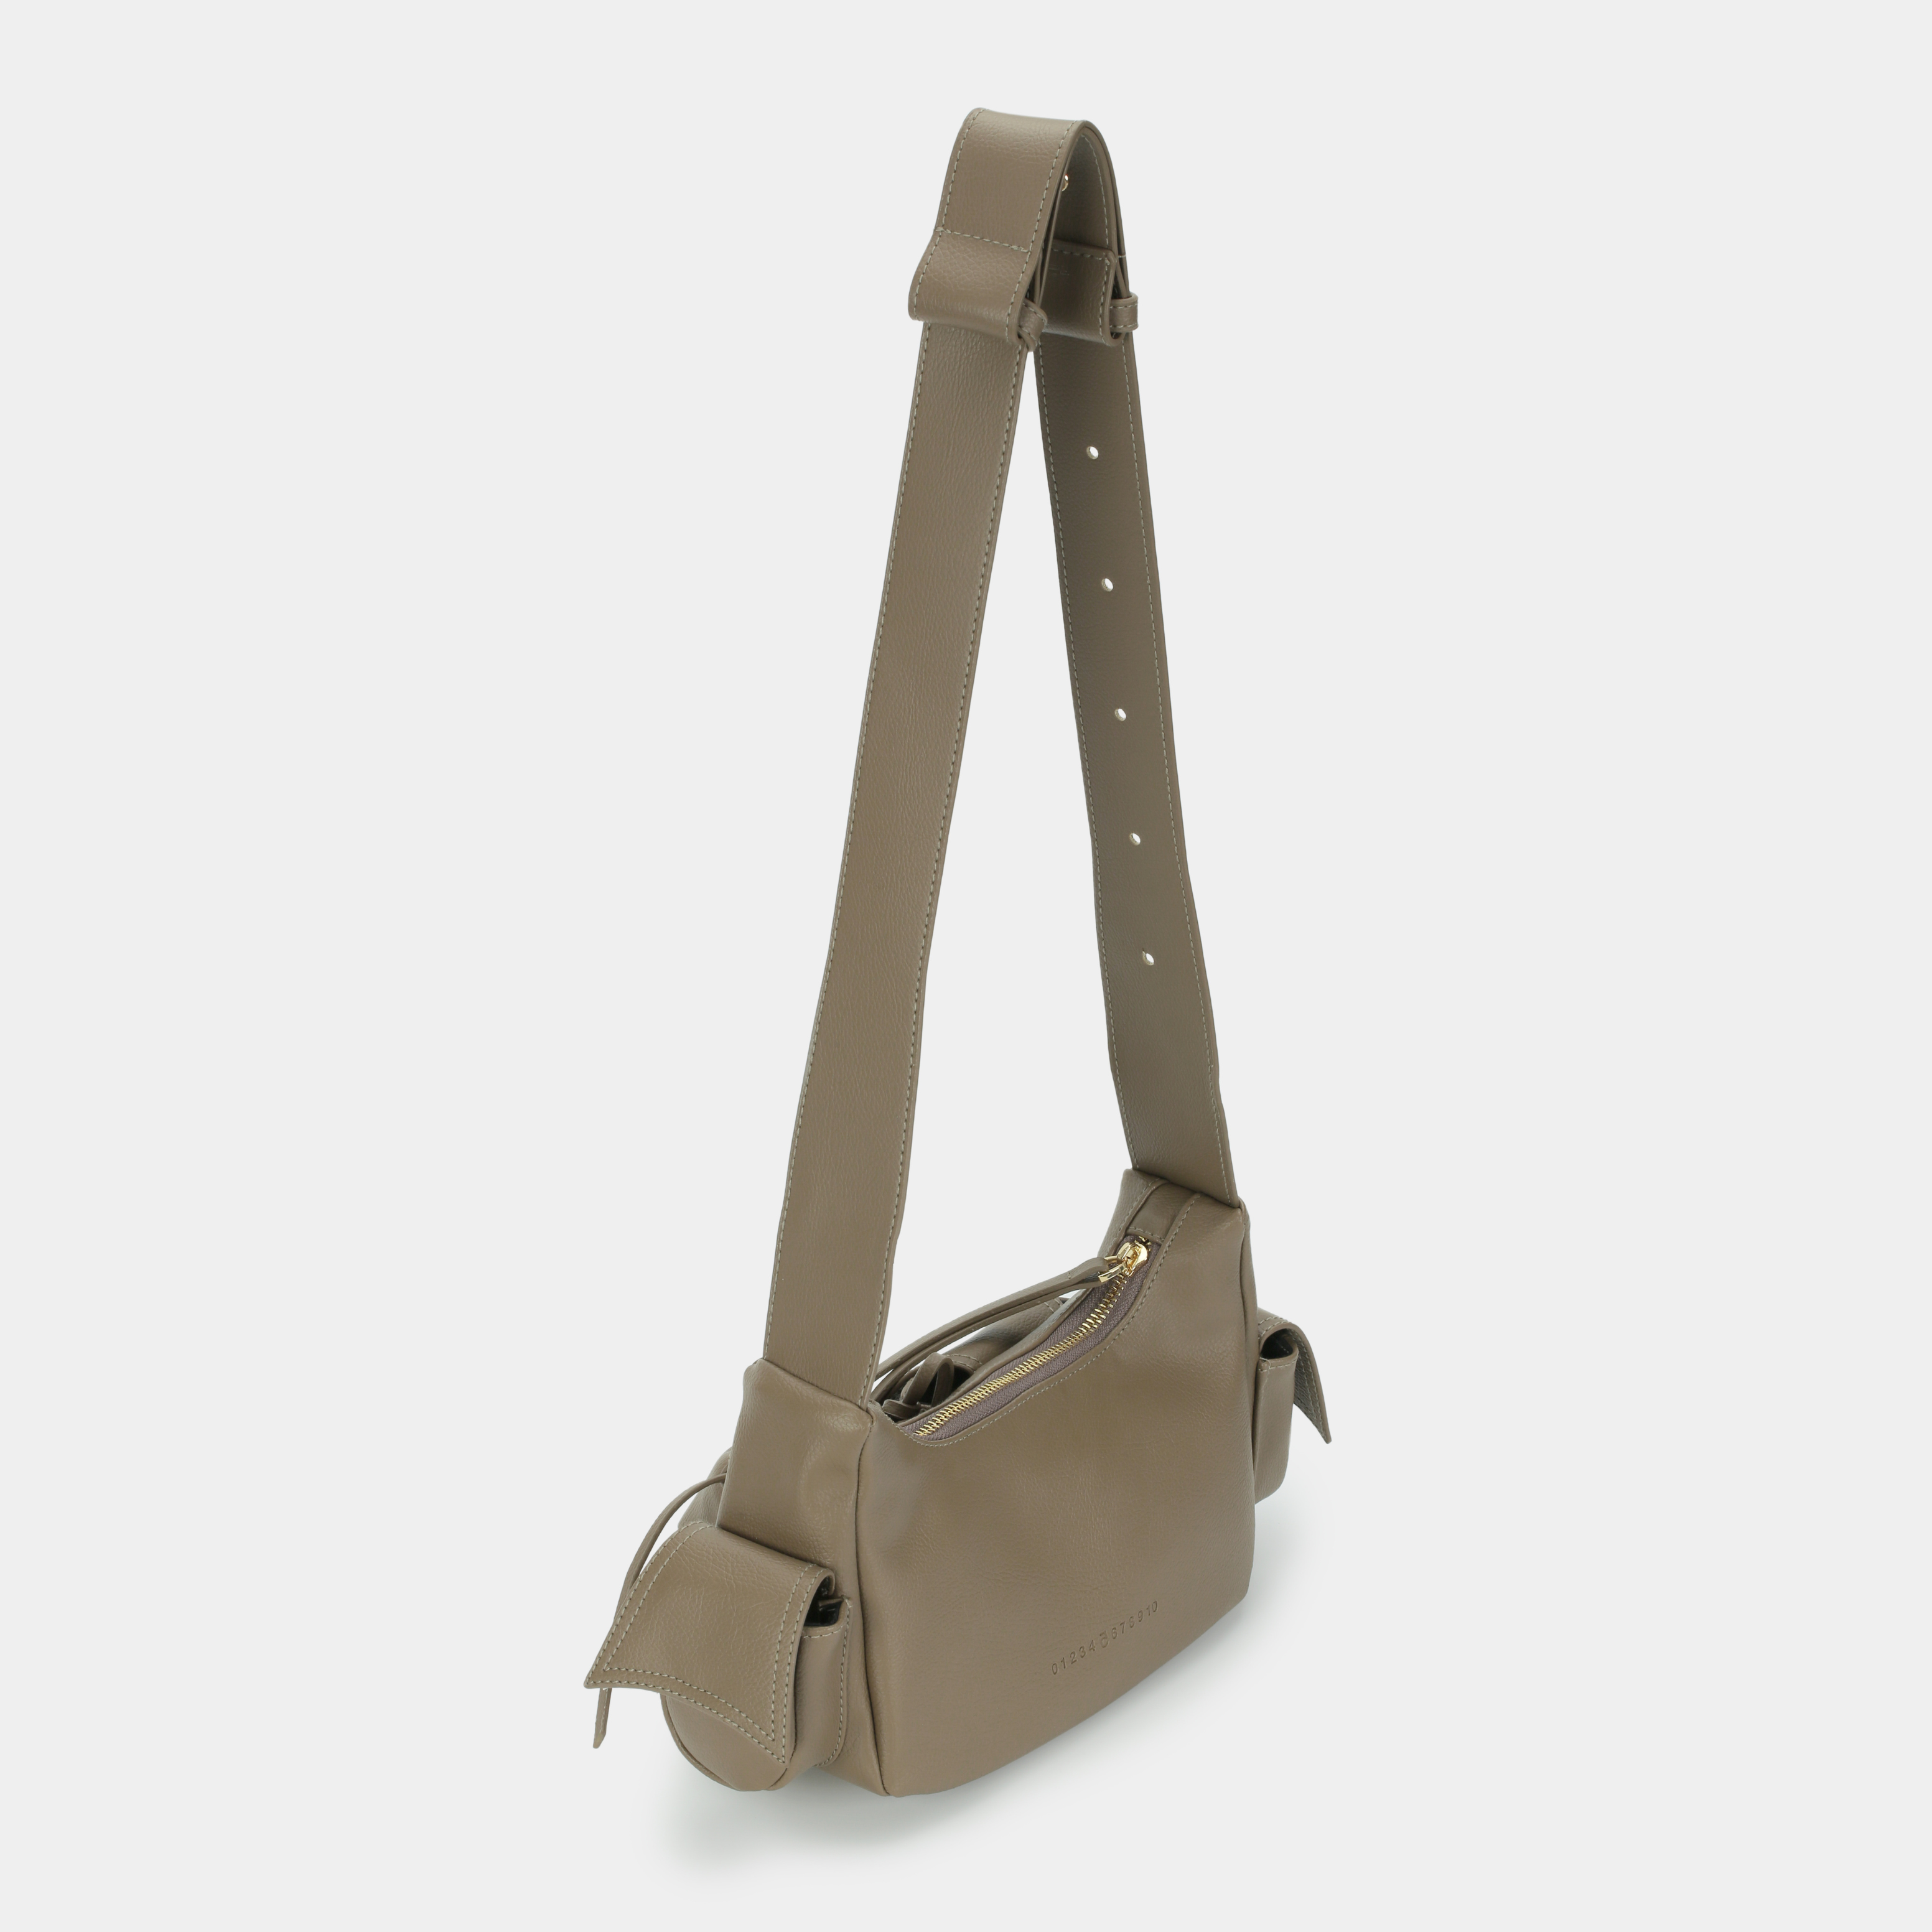 Handbag C5-Pocket size S in Dark Beige